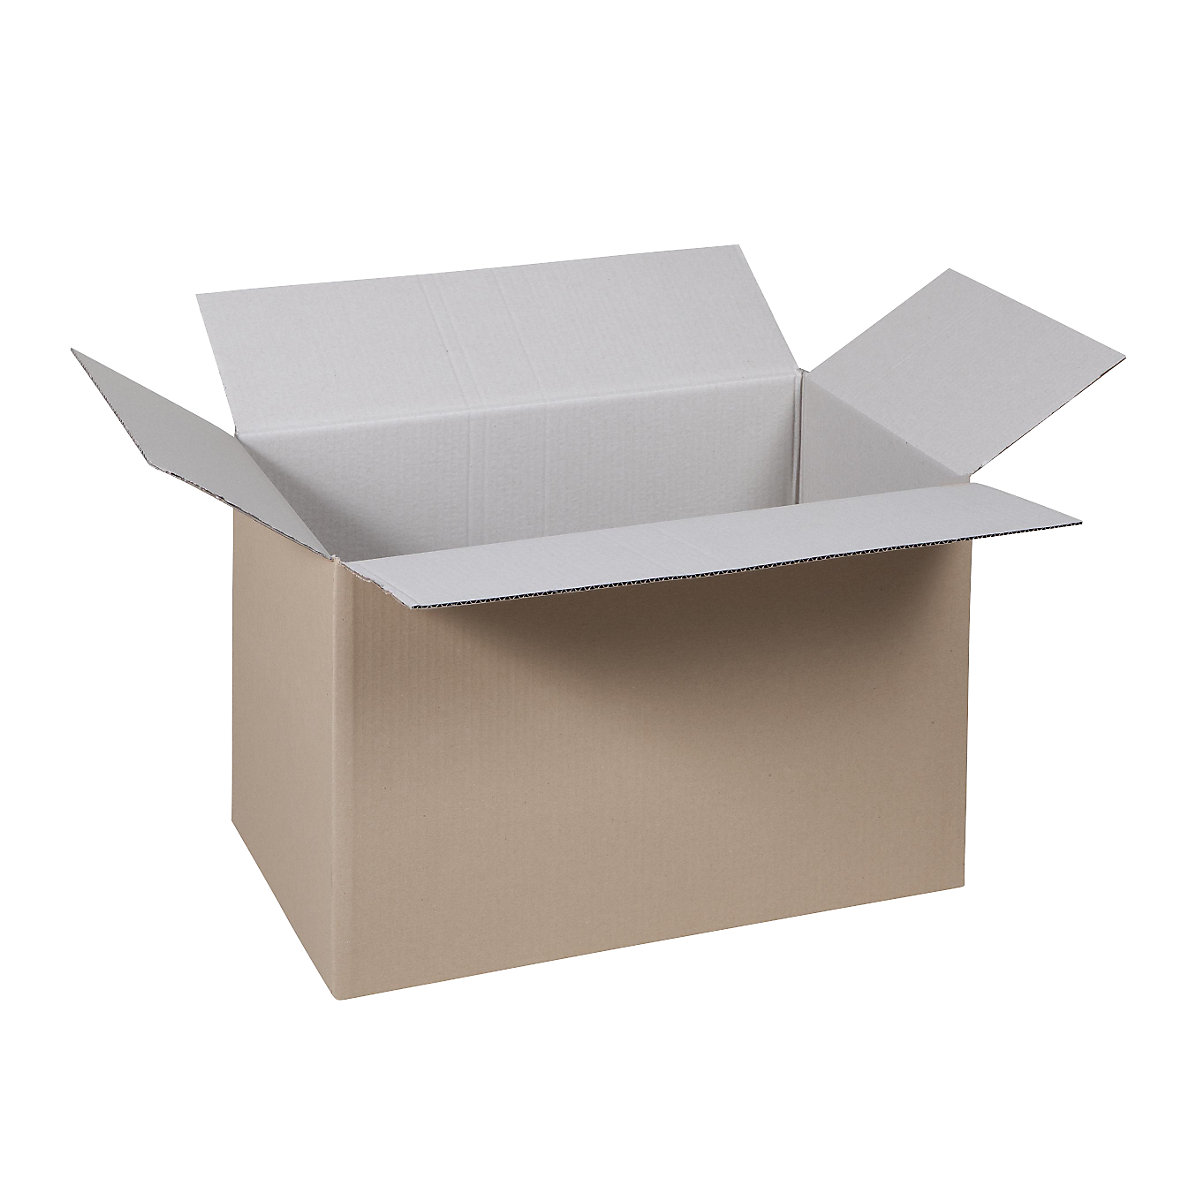 Folding cardboard box, FEFCO 0201, made of single fluted cardboard, internal dimensions 600 x 400 x 360 mm, pack of 100-38